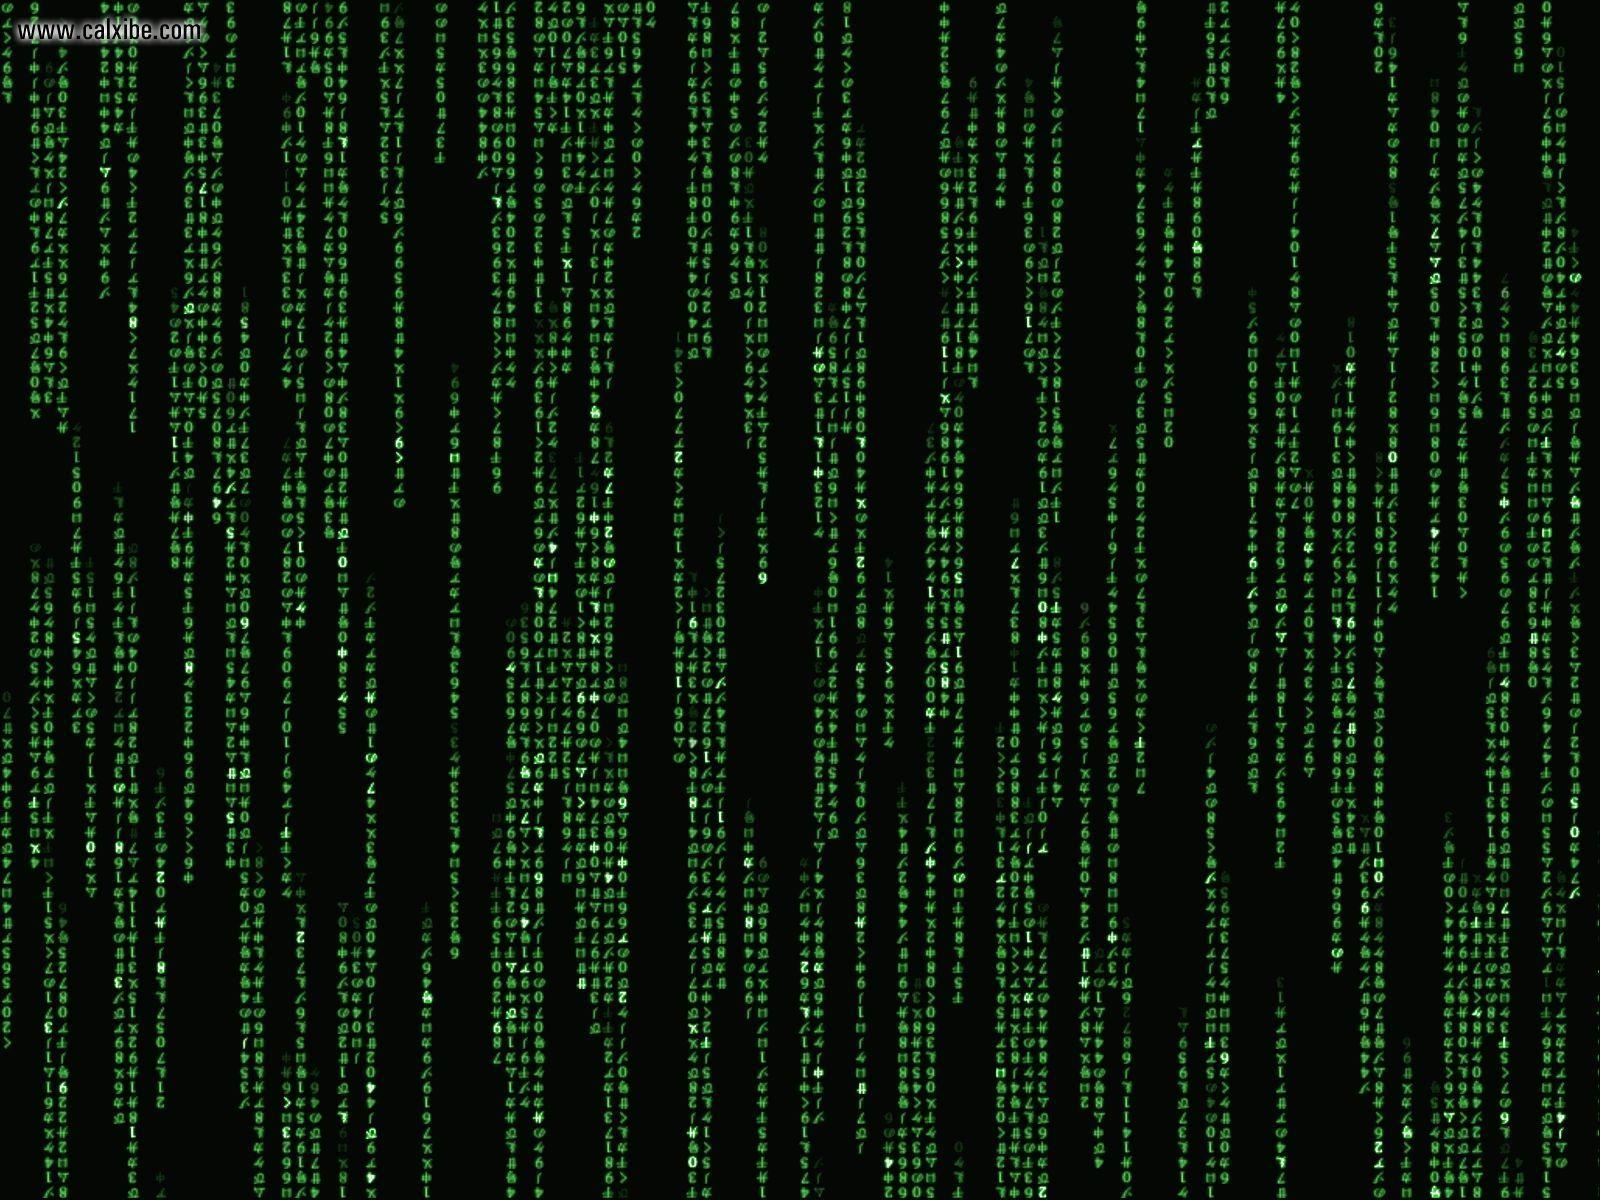 Moving Binary Code Wallpaper, 40 Binary Code High Quality Image